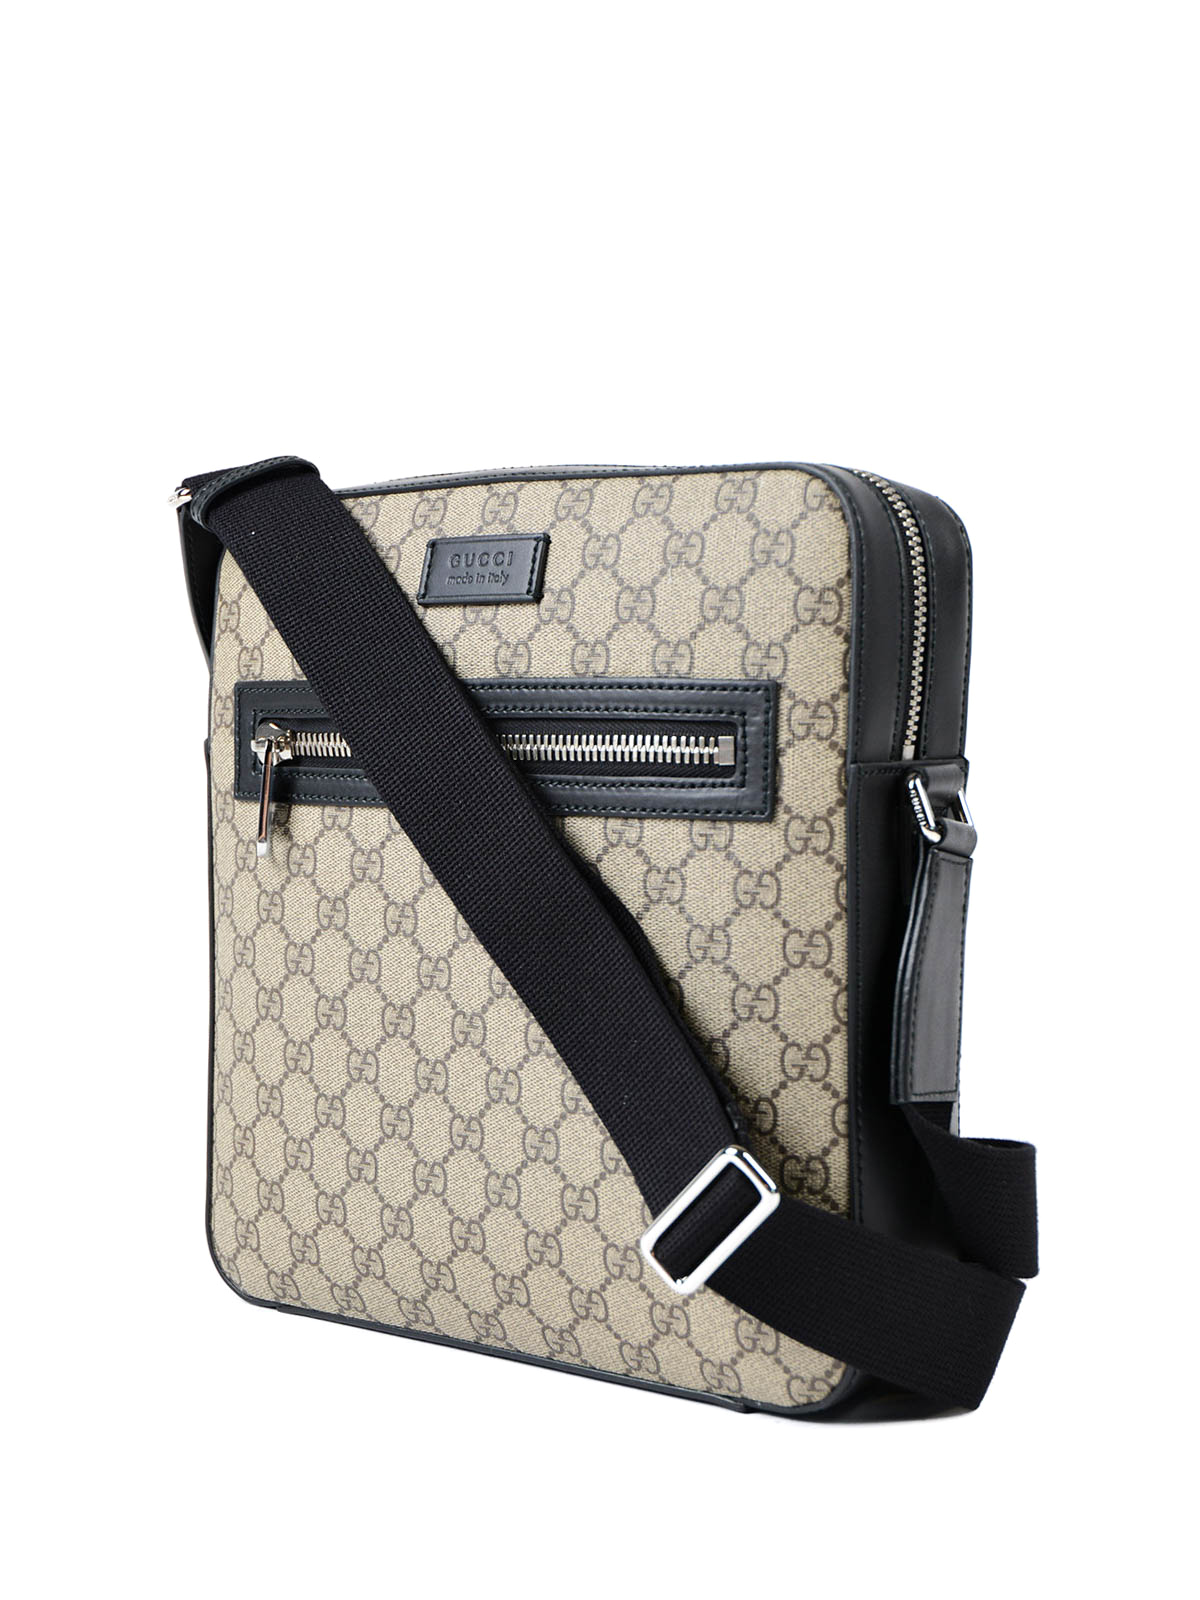 Gucci Gg Supreme Canvas Messenger Bag Ú©ÛŒÙ Ø¯ÙˆØ´ÛŒ 473878k5rln9769